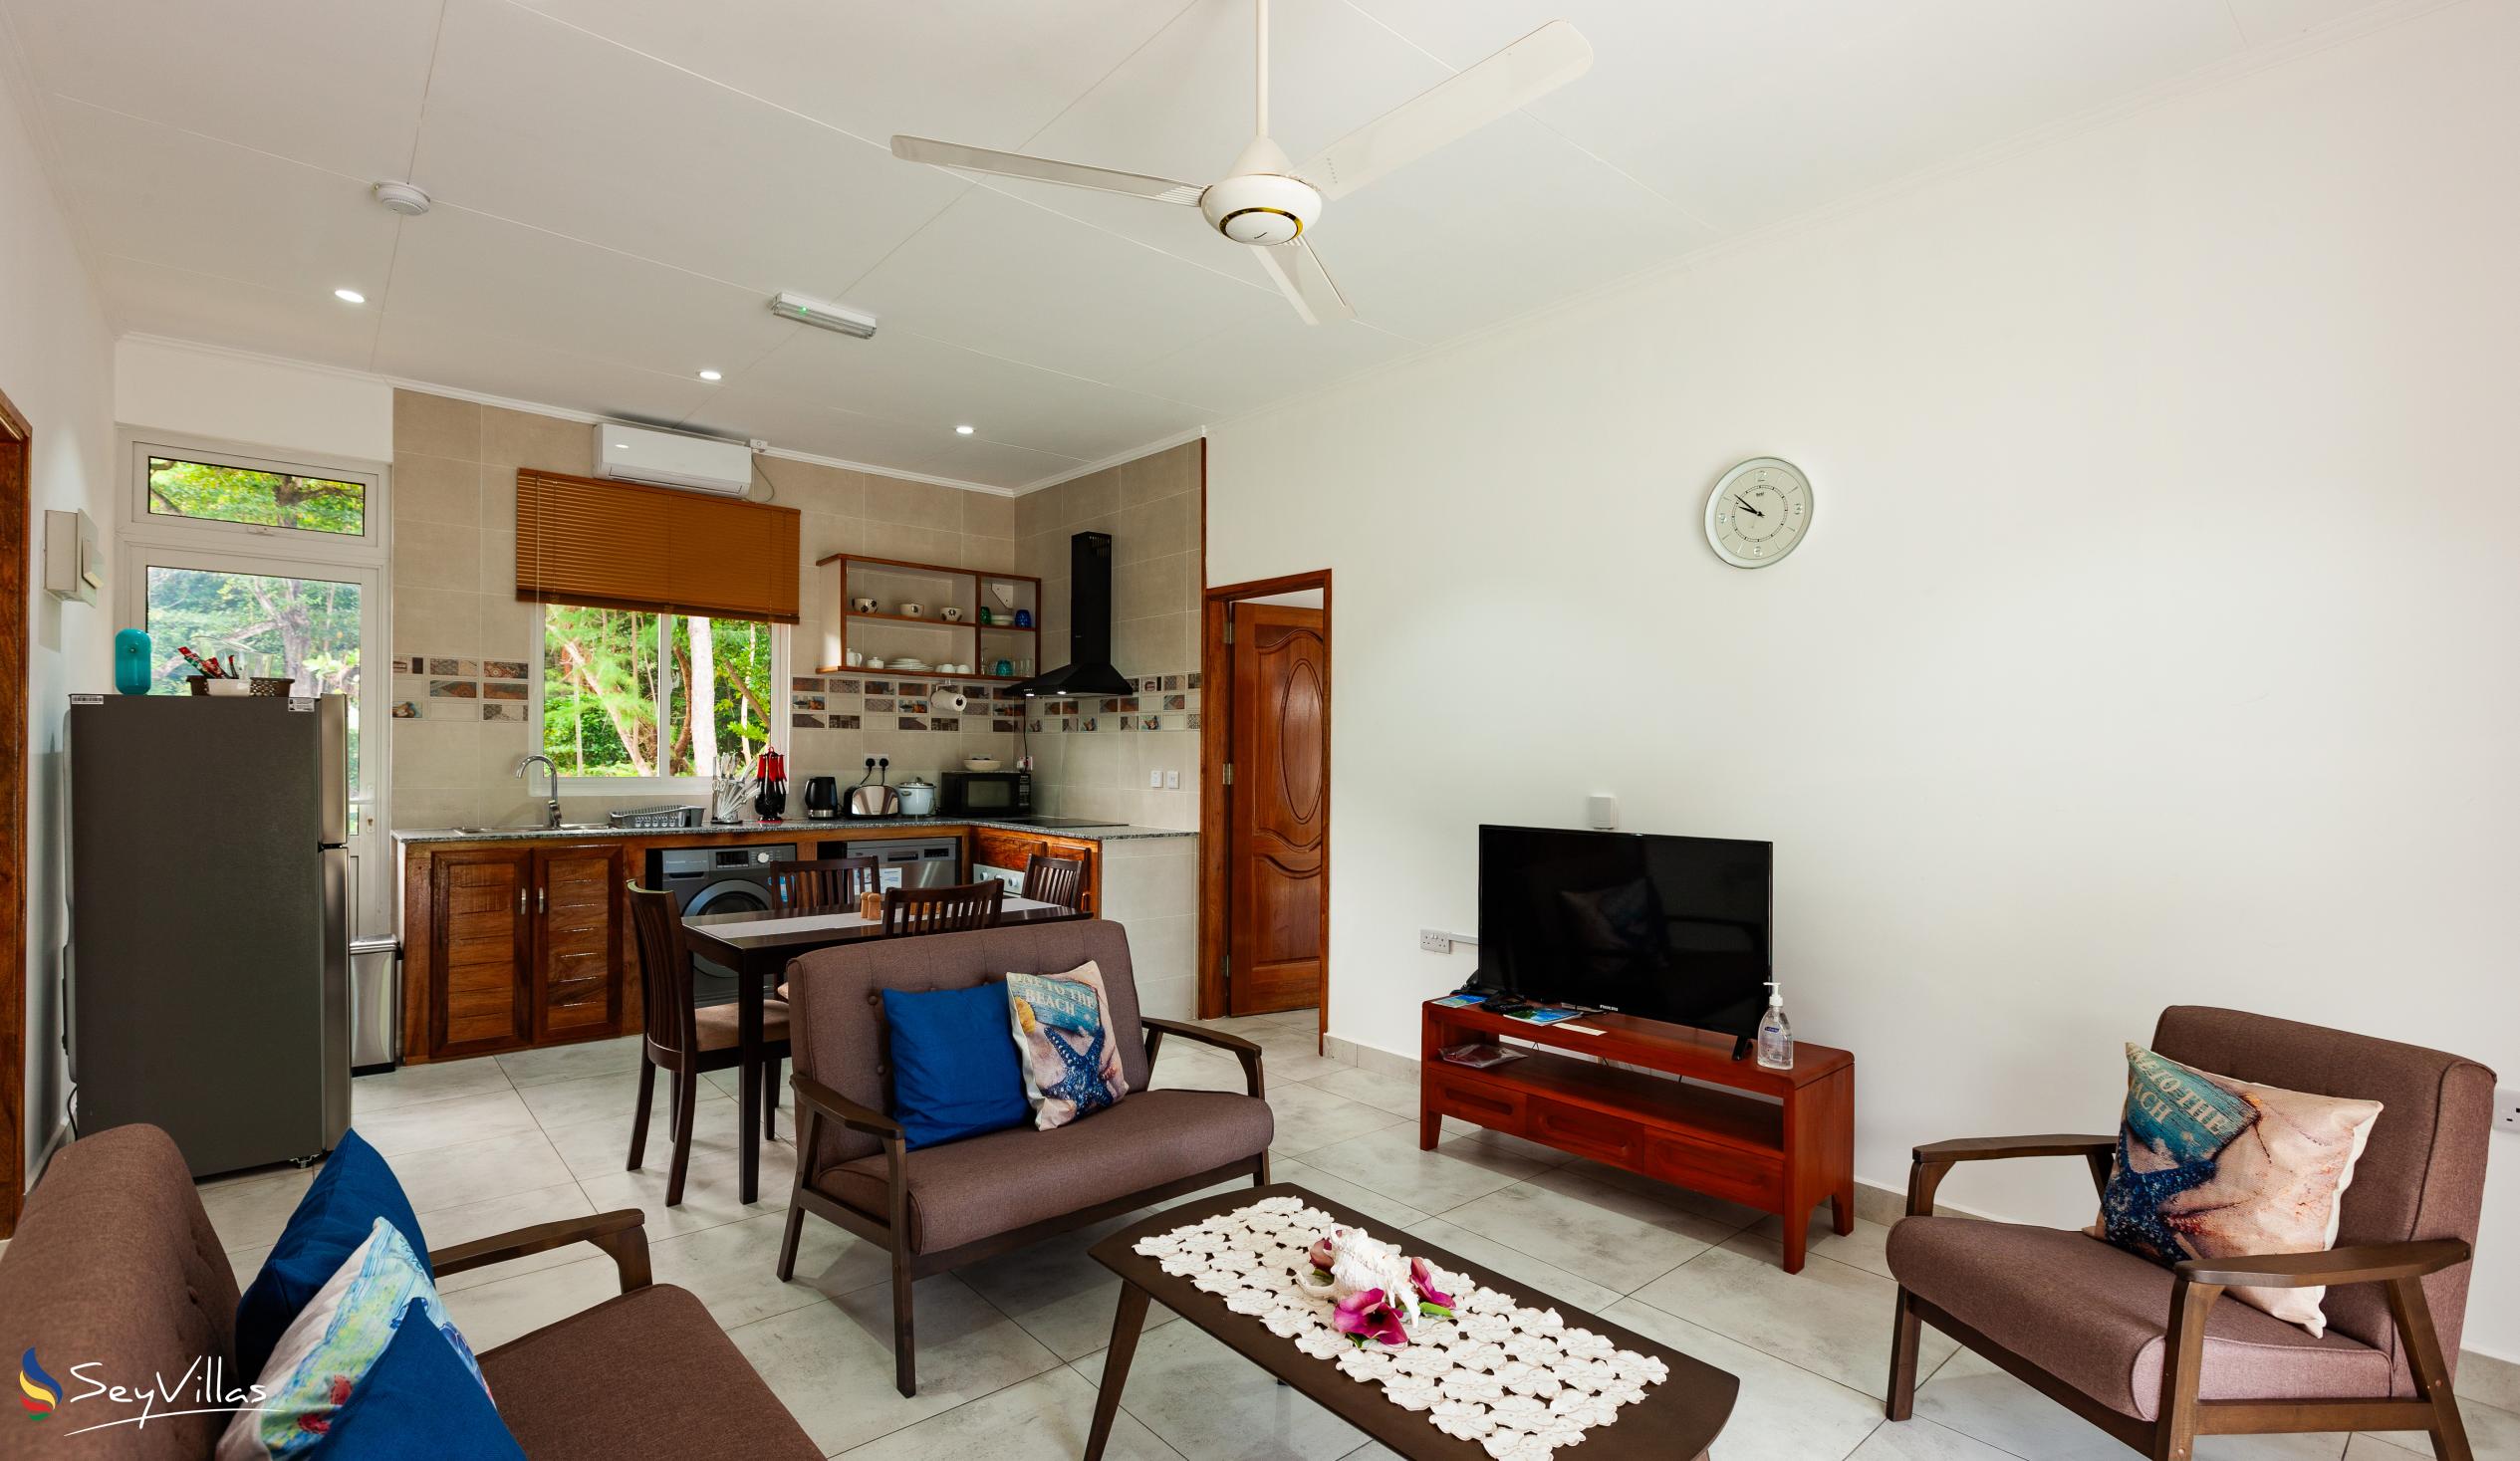 Photo 23: MacMillan's Holiday Villas - 2-Bedroom Chalet - Praslin (Seychelles)